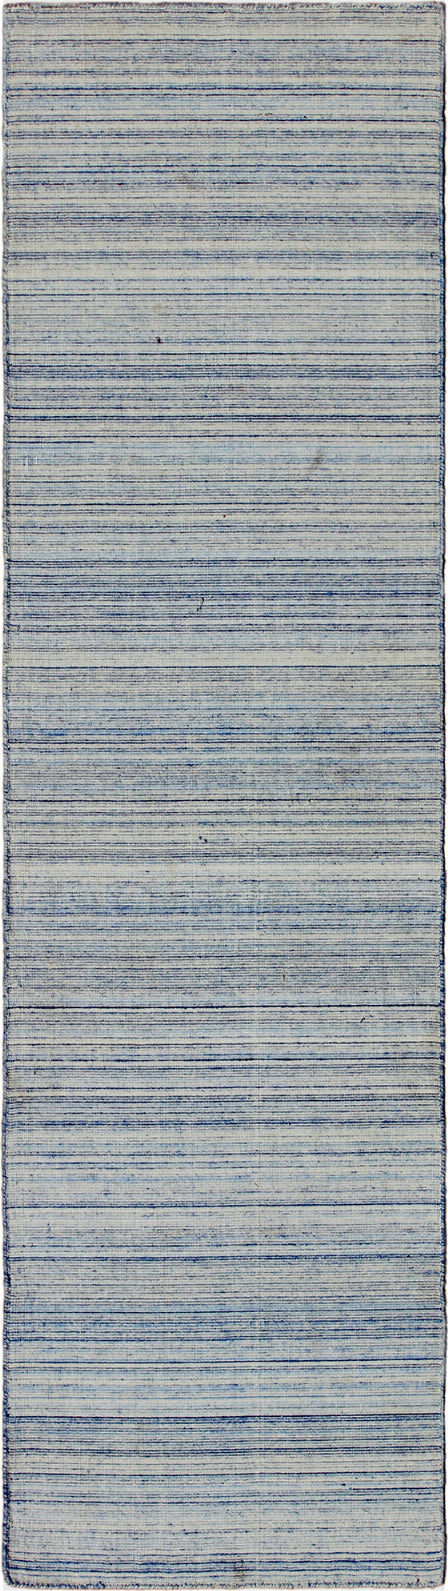 Trans Ocean Dakota 6147/03 Stripe Blue Area Rug by Liora Manne